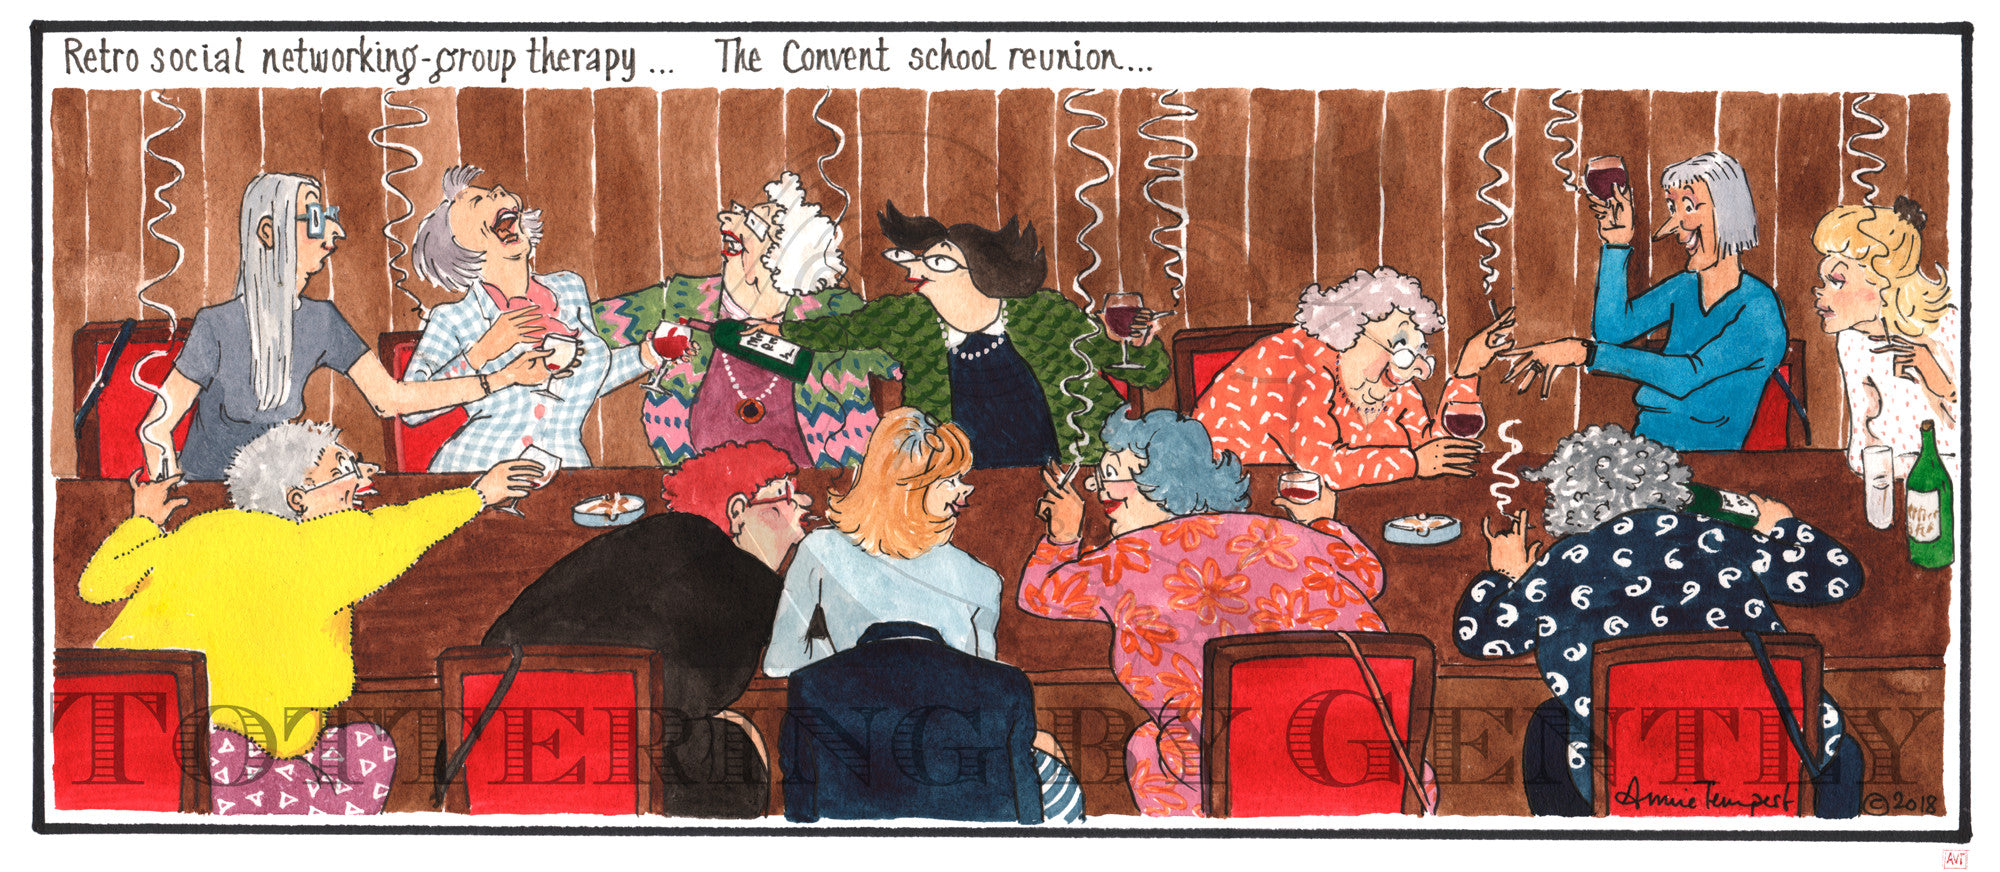 The Convent school reunion ...  (CL1232)